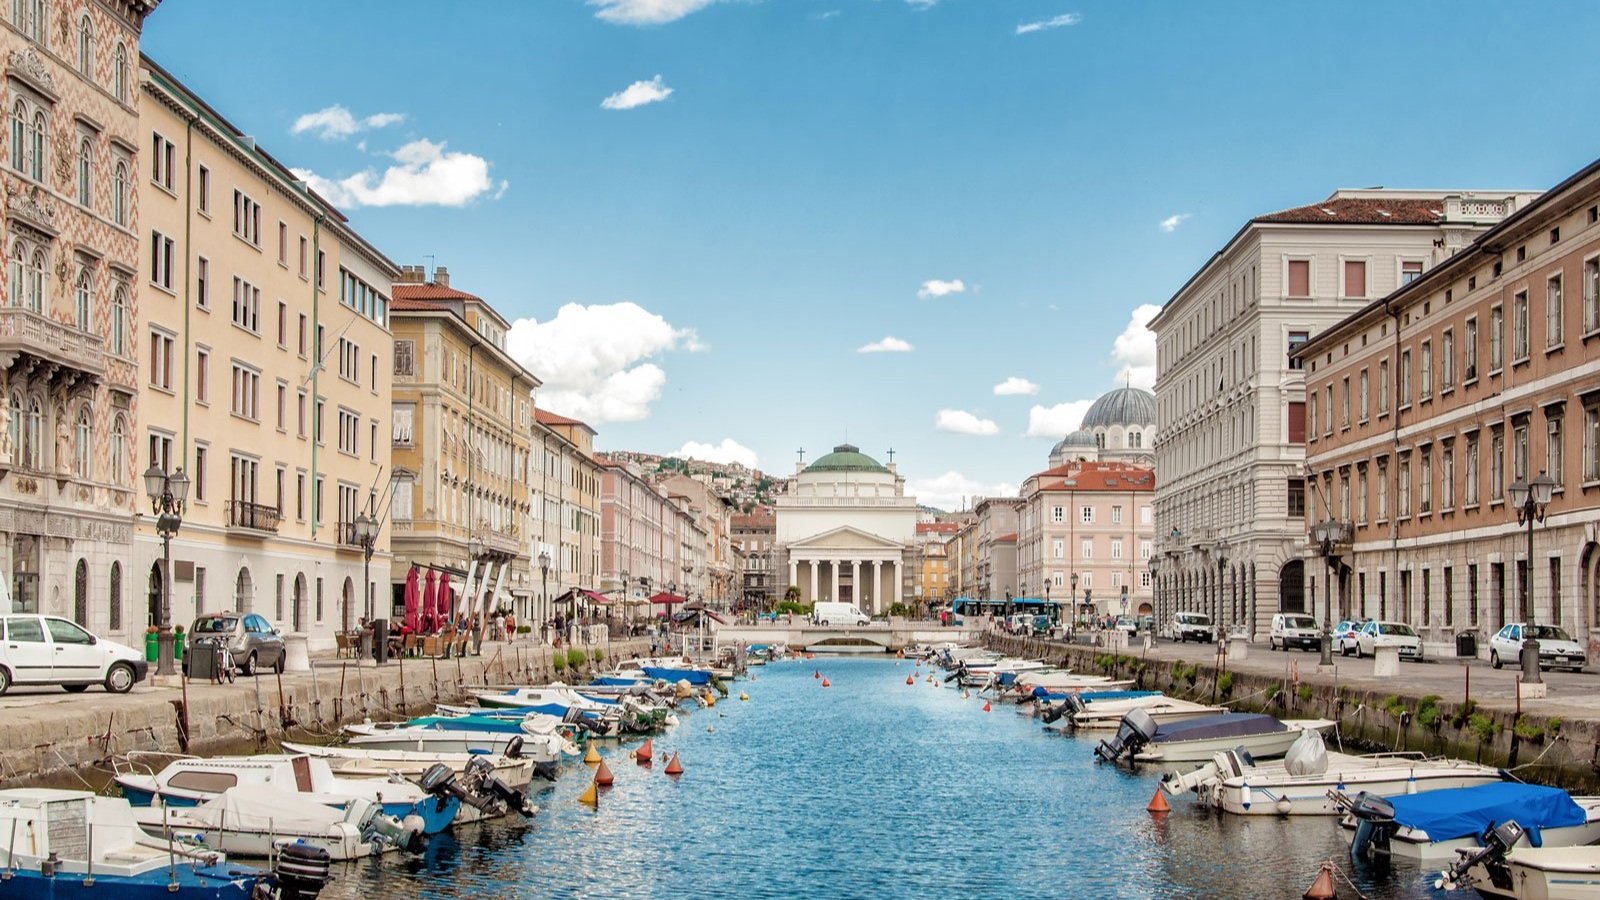 Trieste's Canal Grande